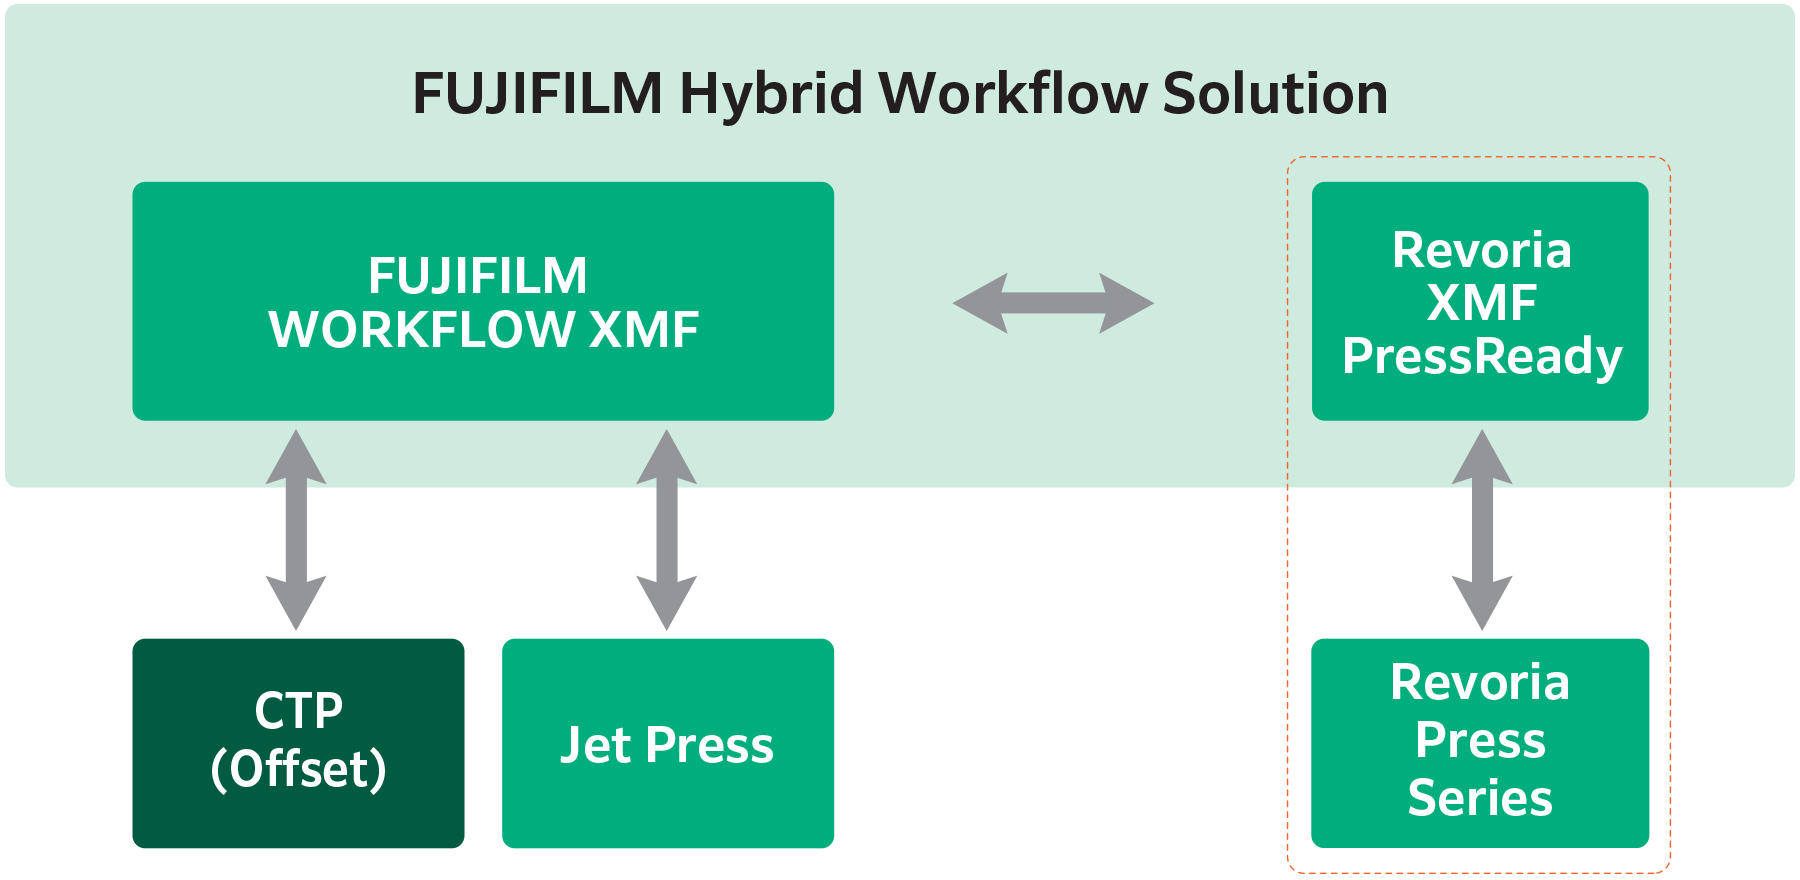 FUJIFILM Hybrid Workflow Solution